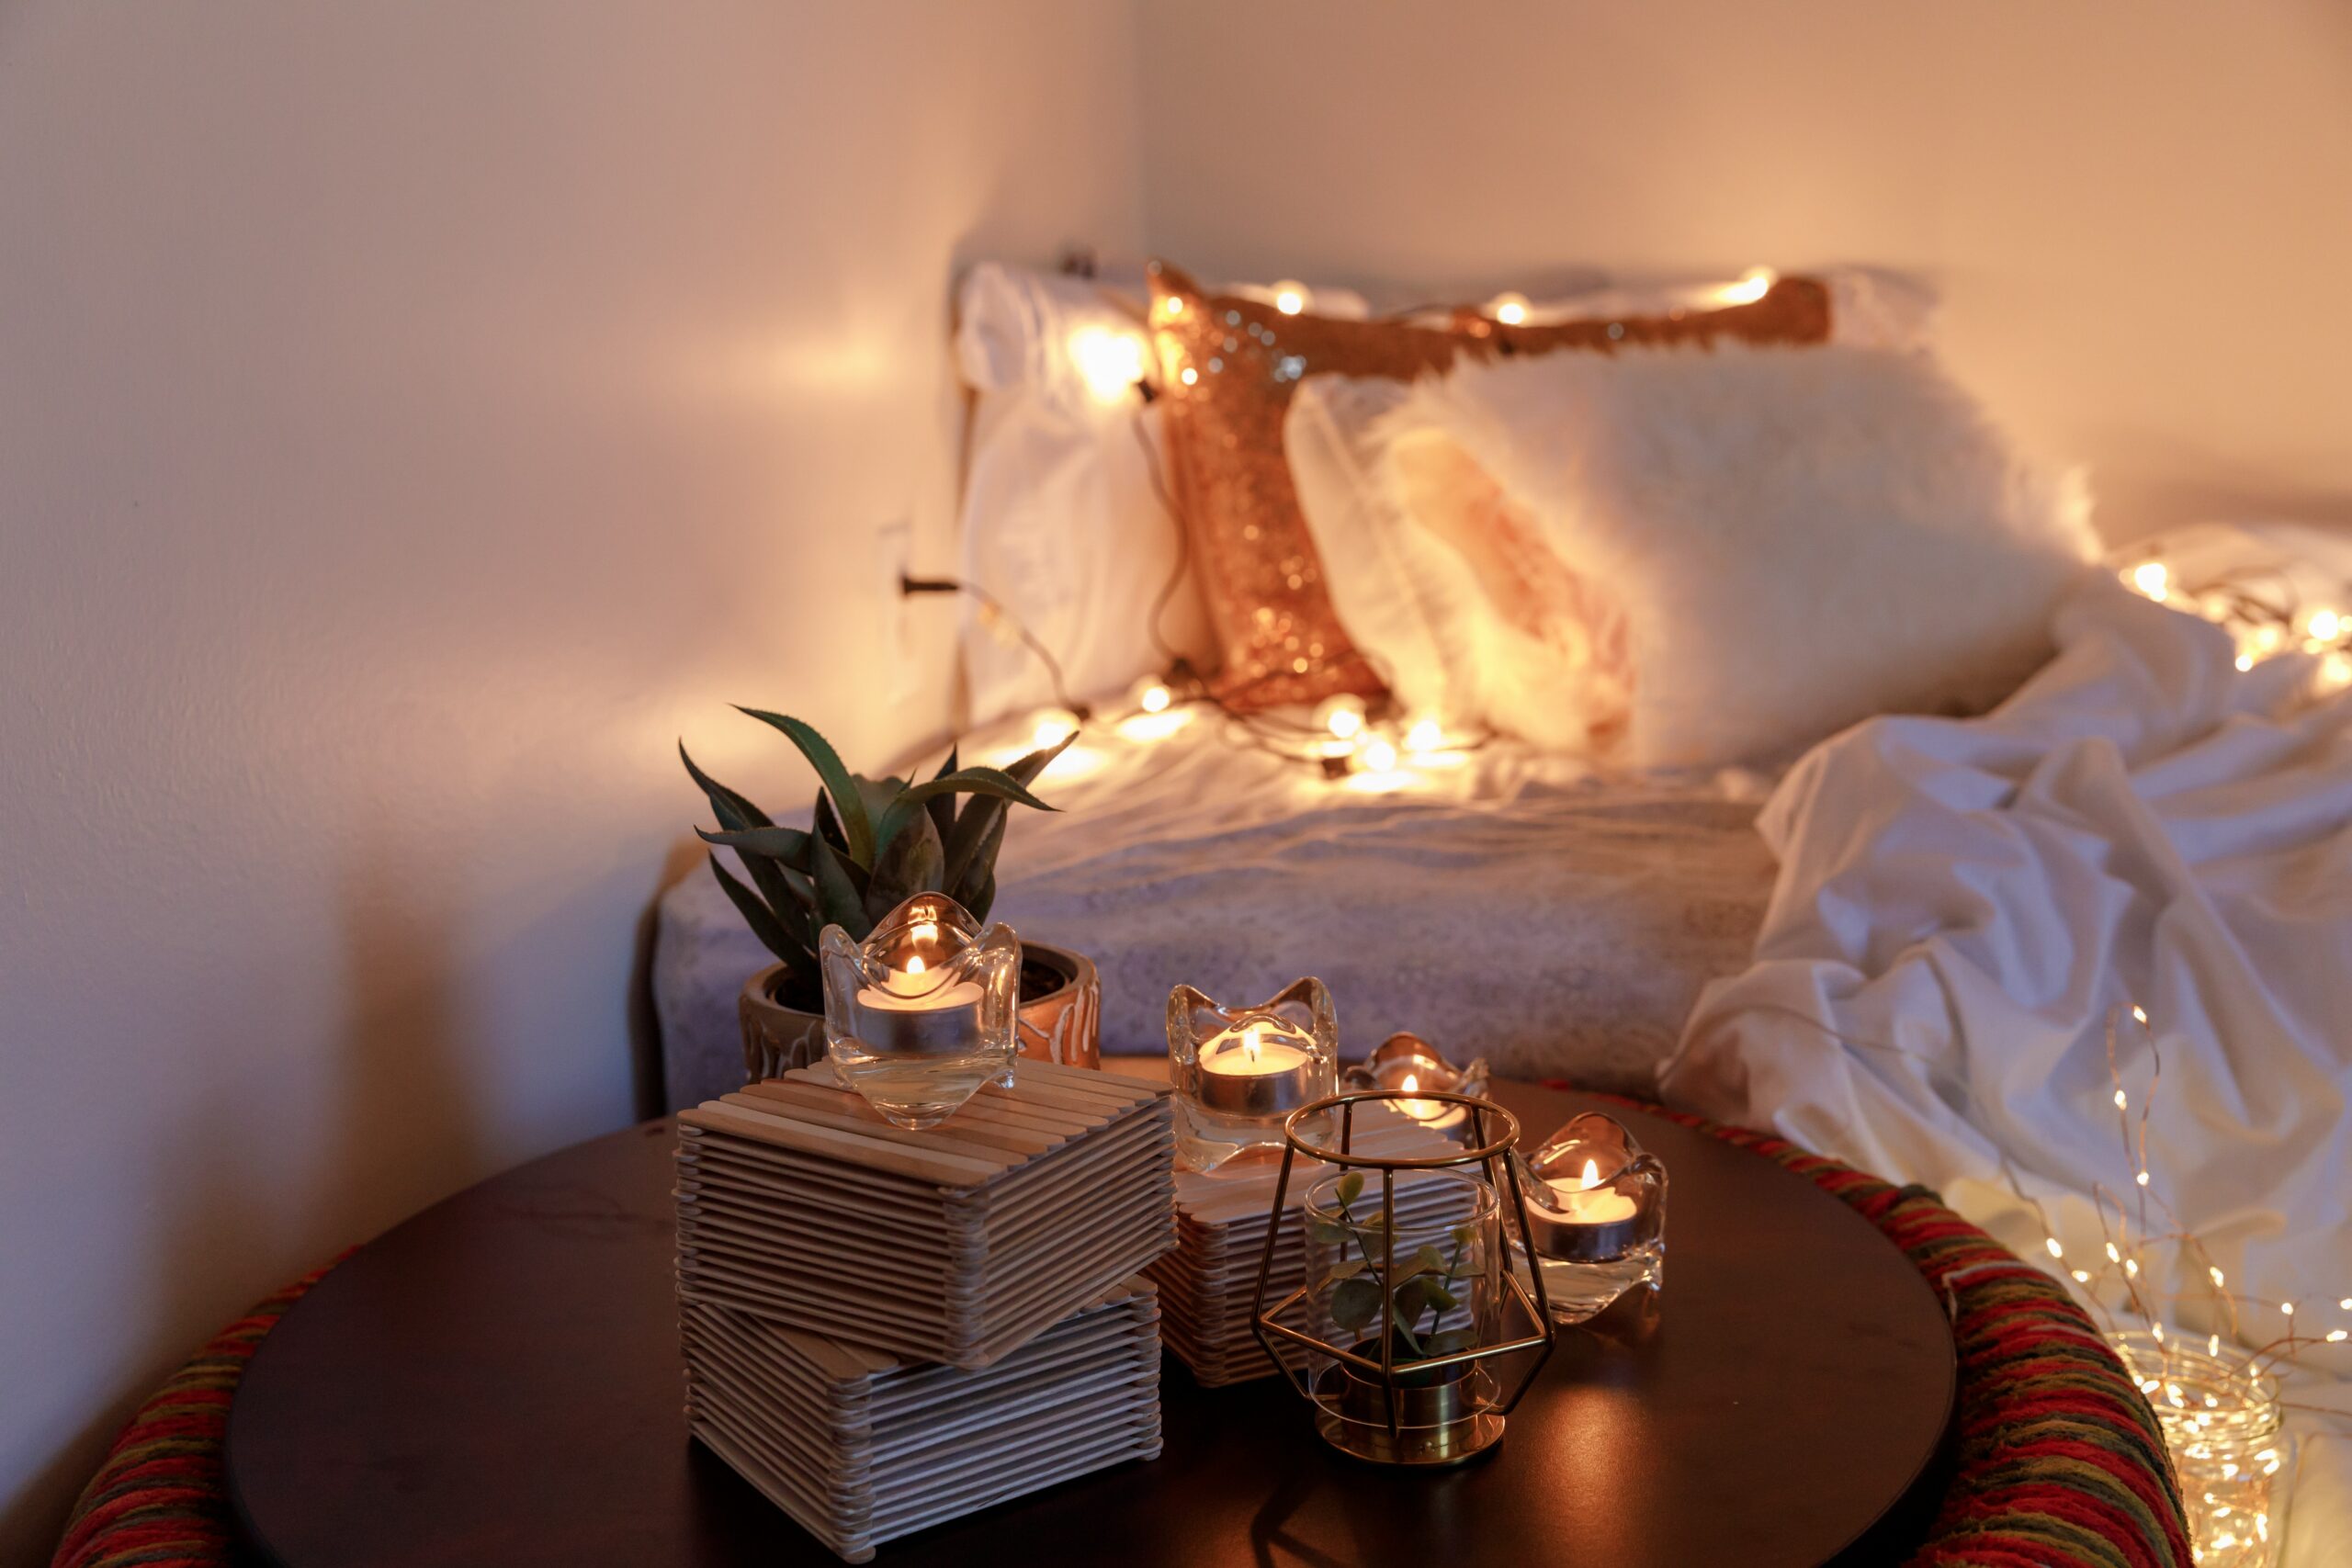 Svietiace gule v spálni vytvorili romantiku